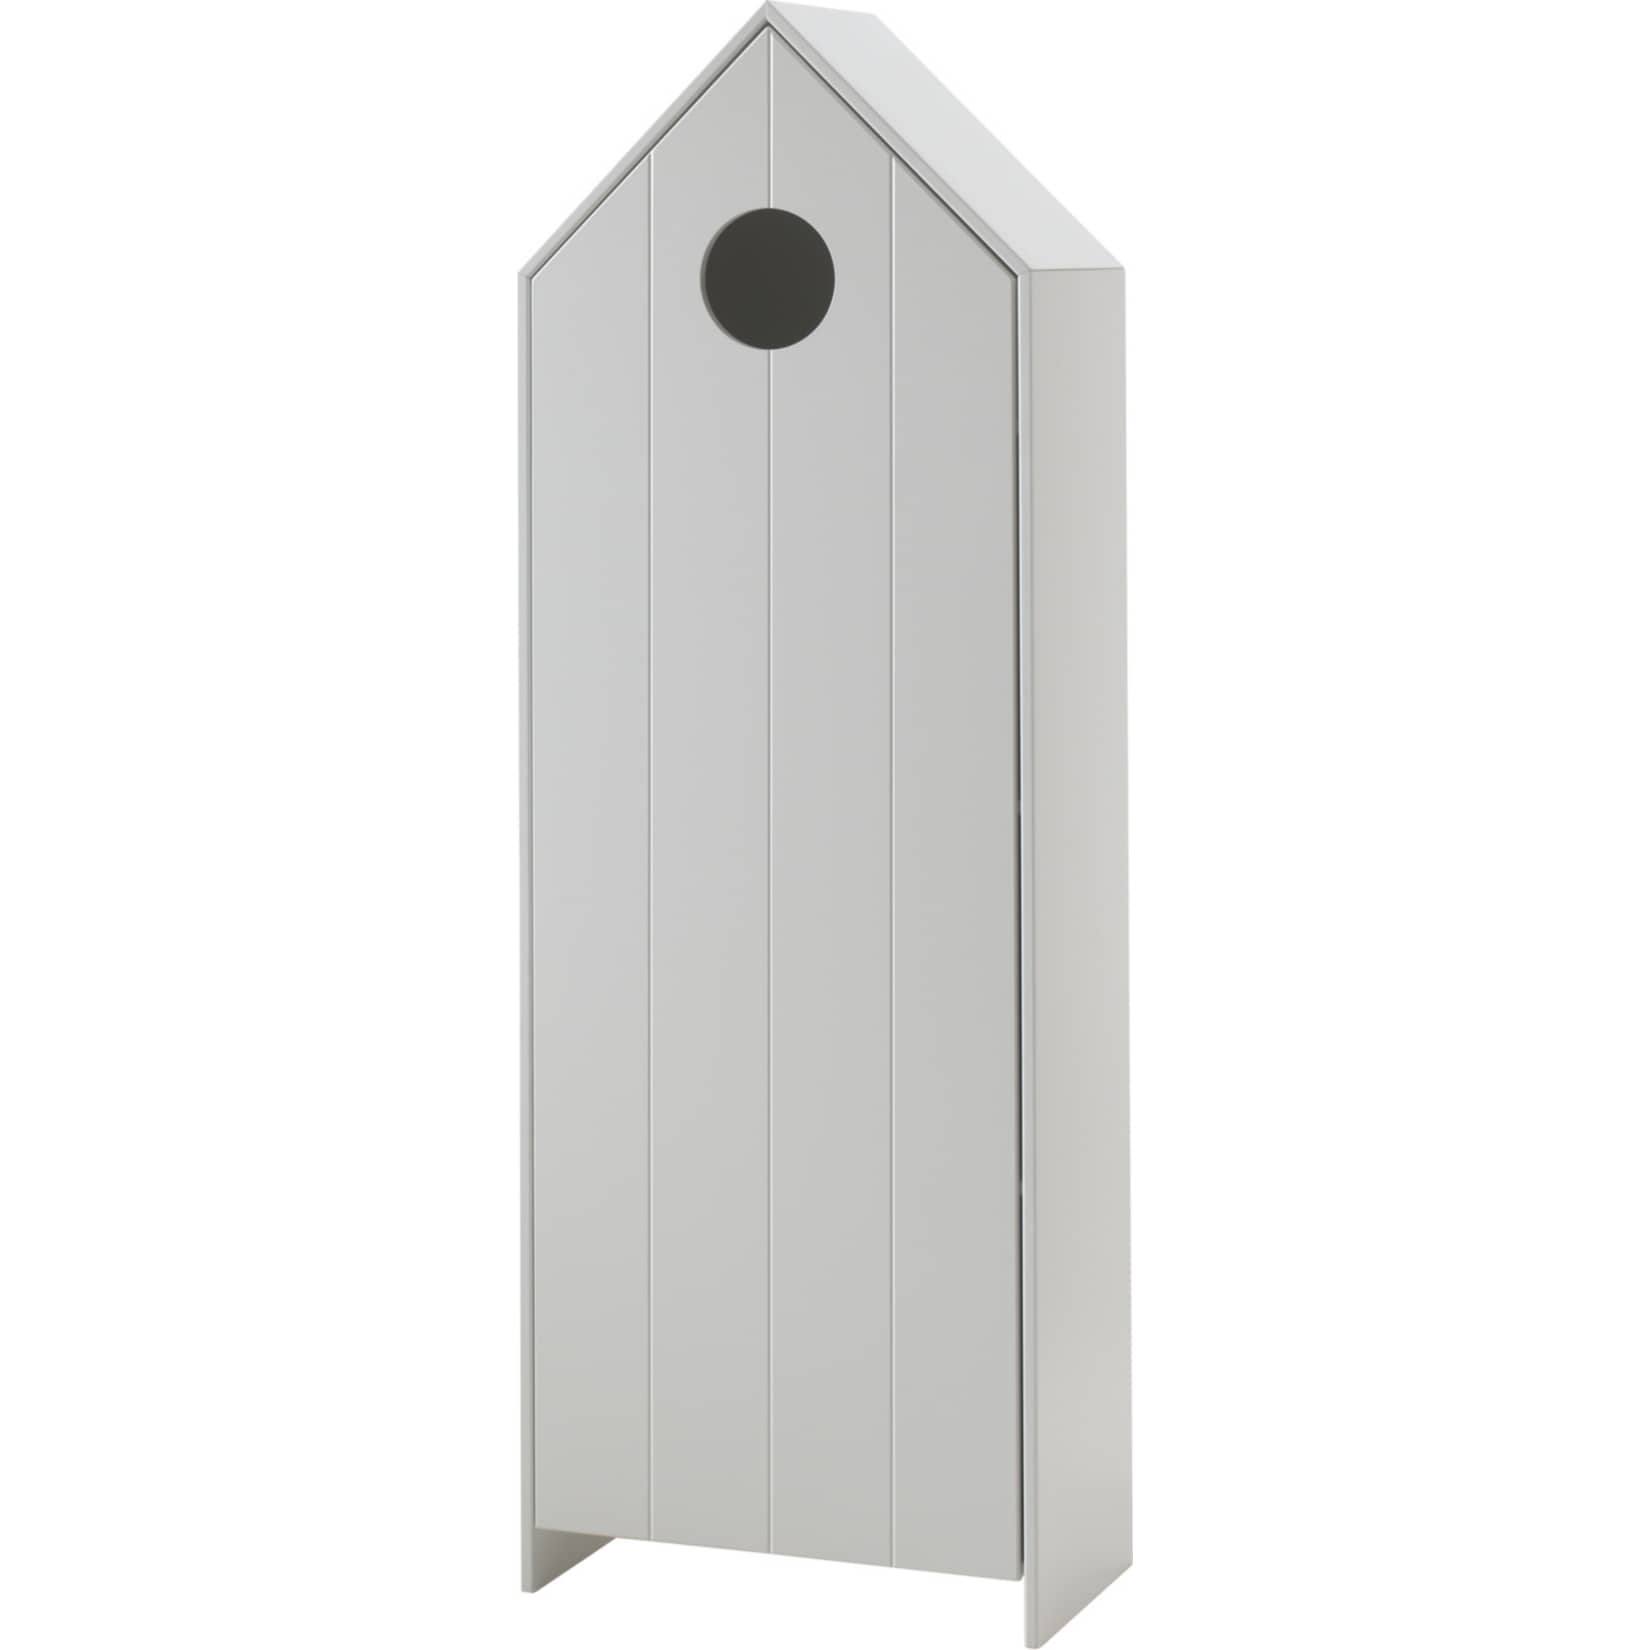 Vipack CASAMI - Schrank mit Tür weiß, Rillenprofil senkrecht, MDF lackiert